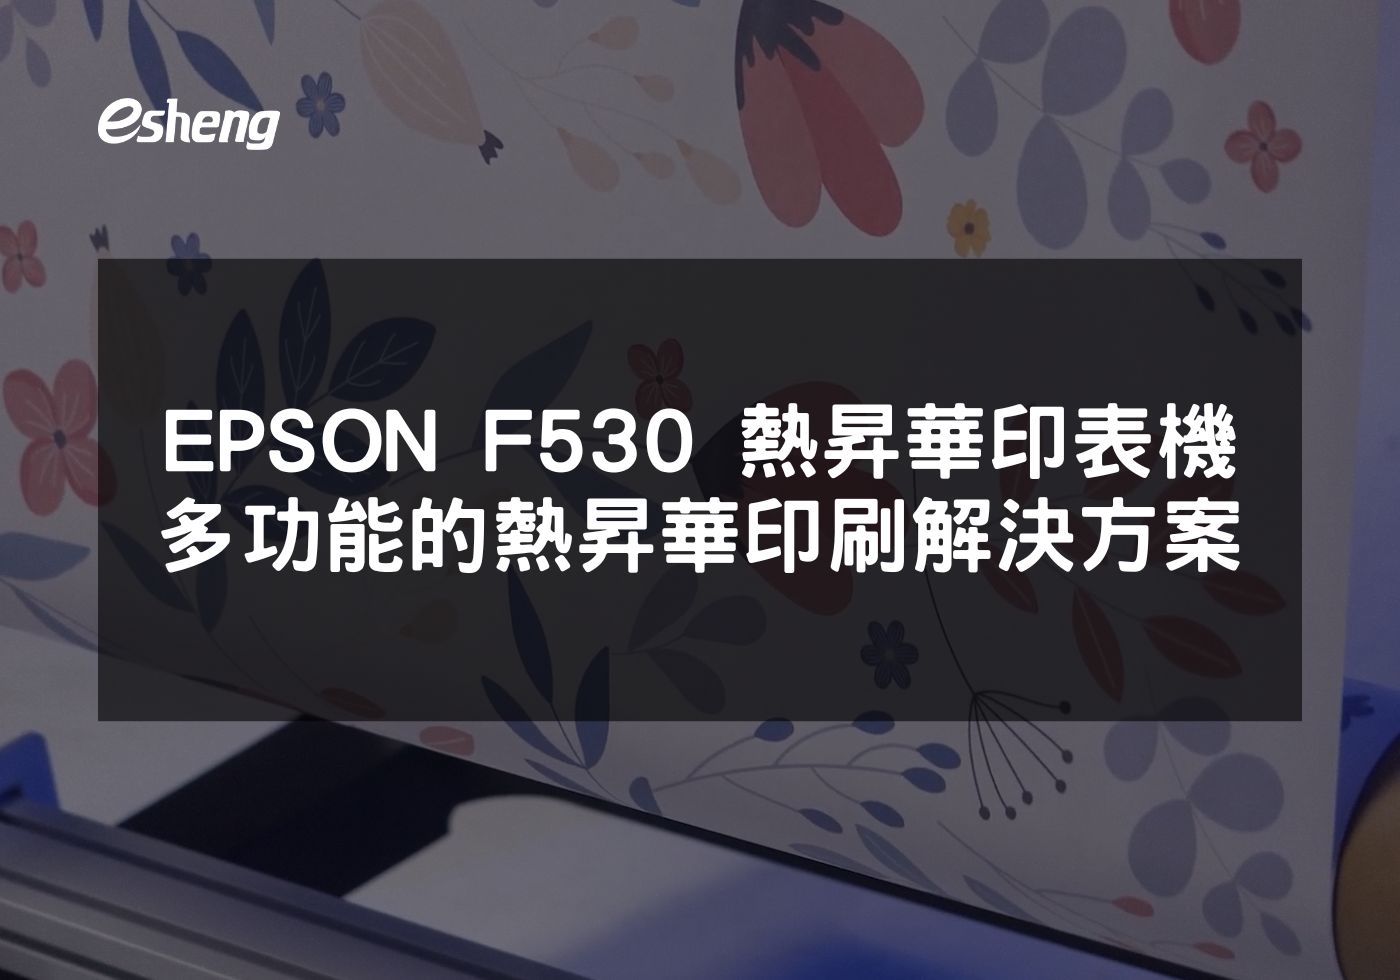 EPSON F530熱昇華印表機增強企業品牌形象